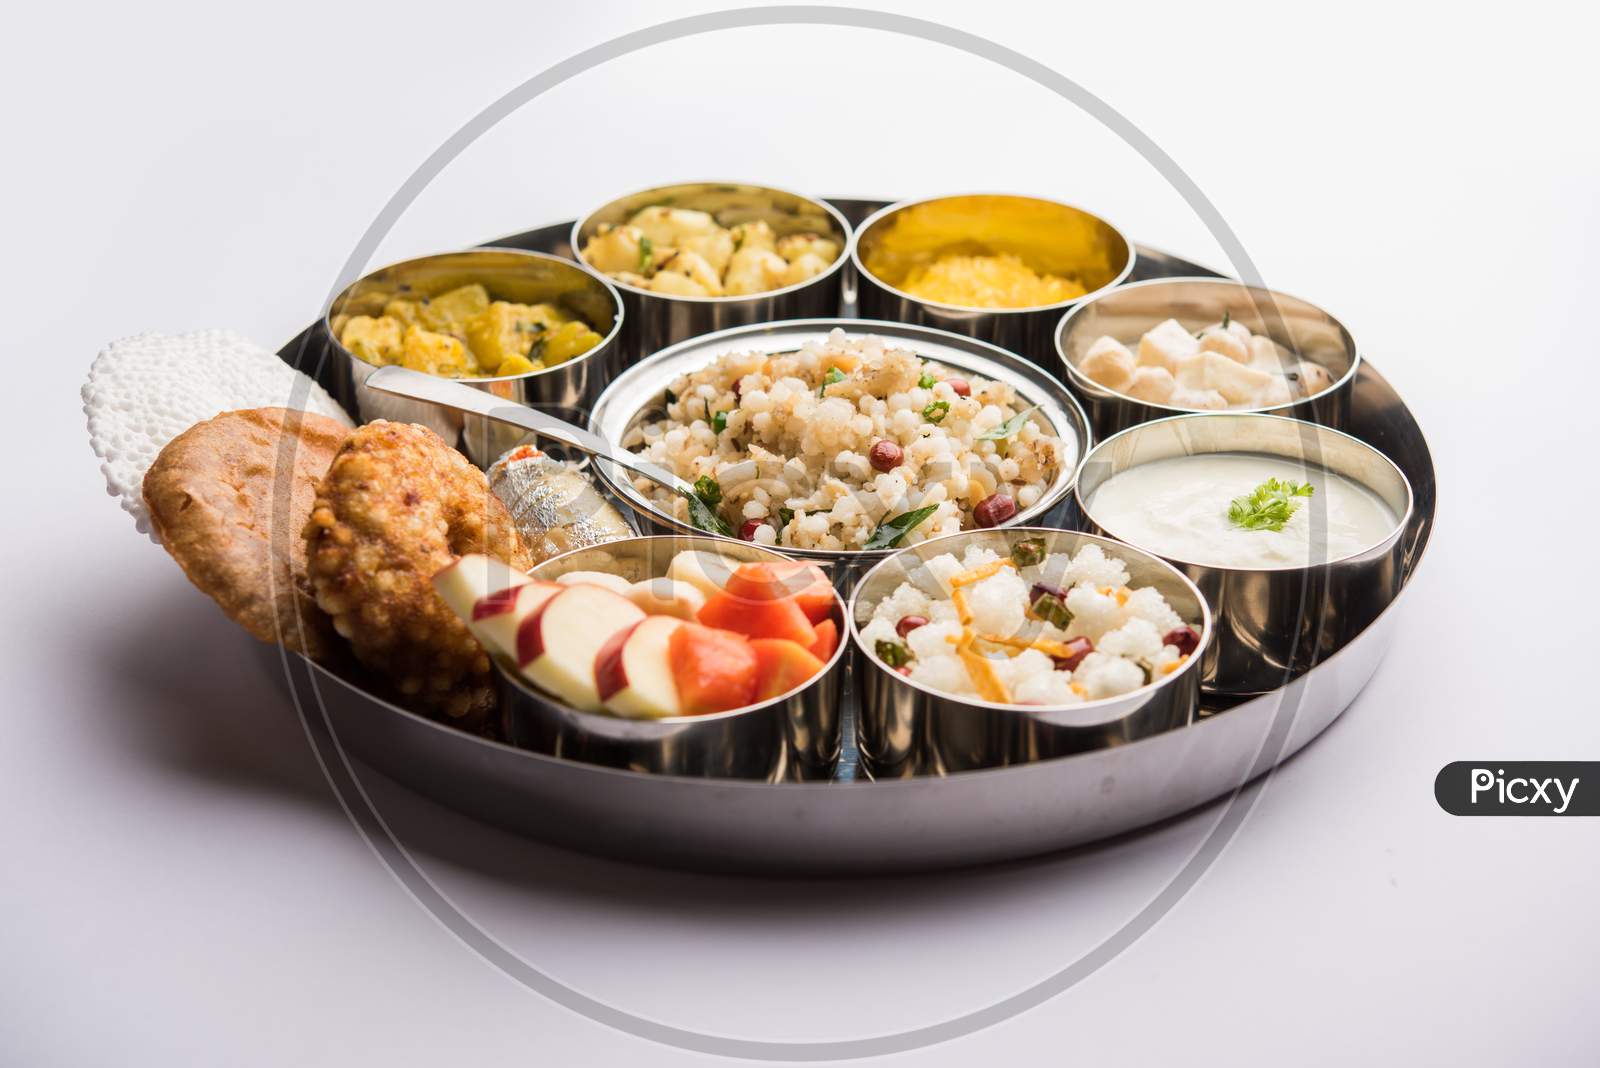 Navratri Upwas Thali / Fasting food platter, selective focus